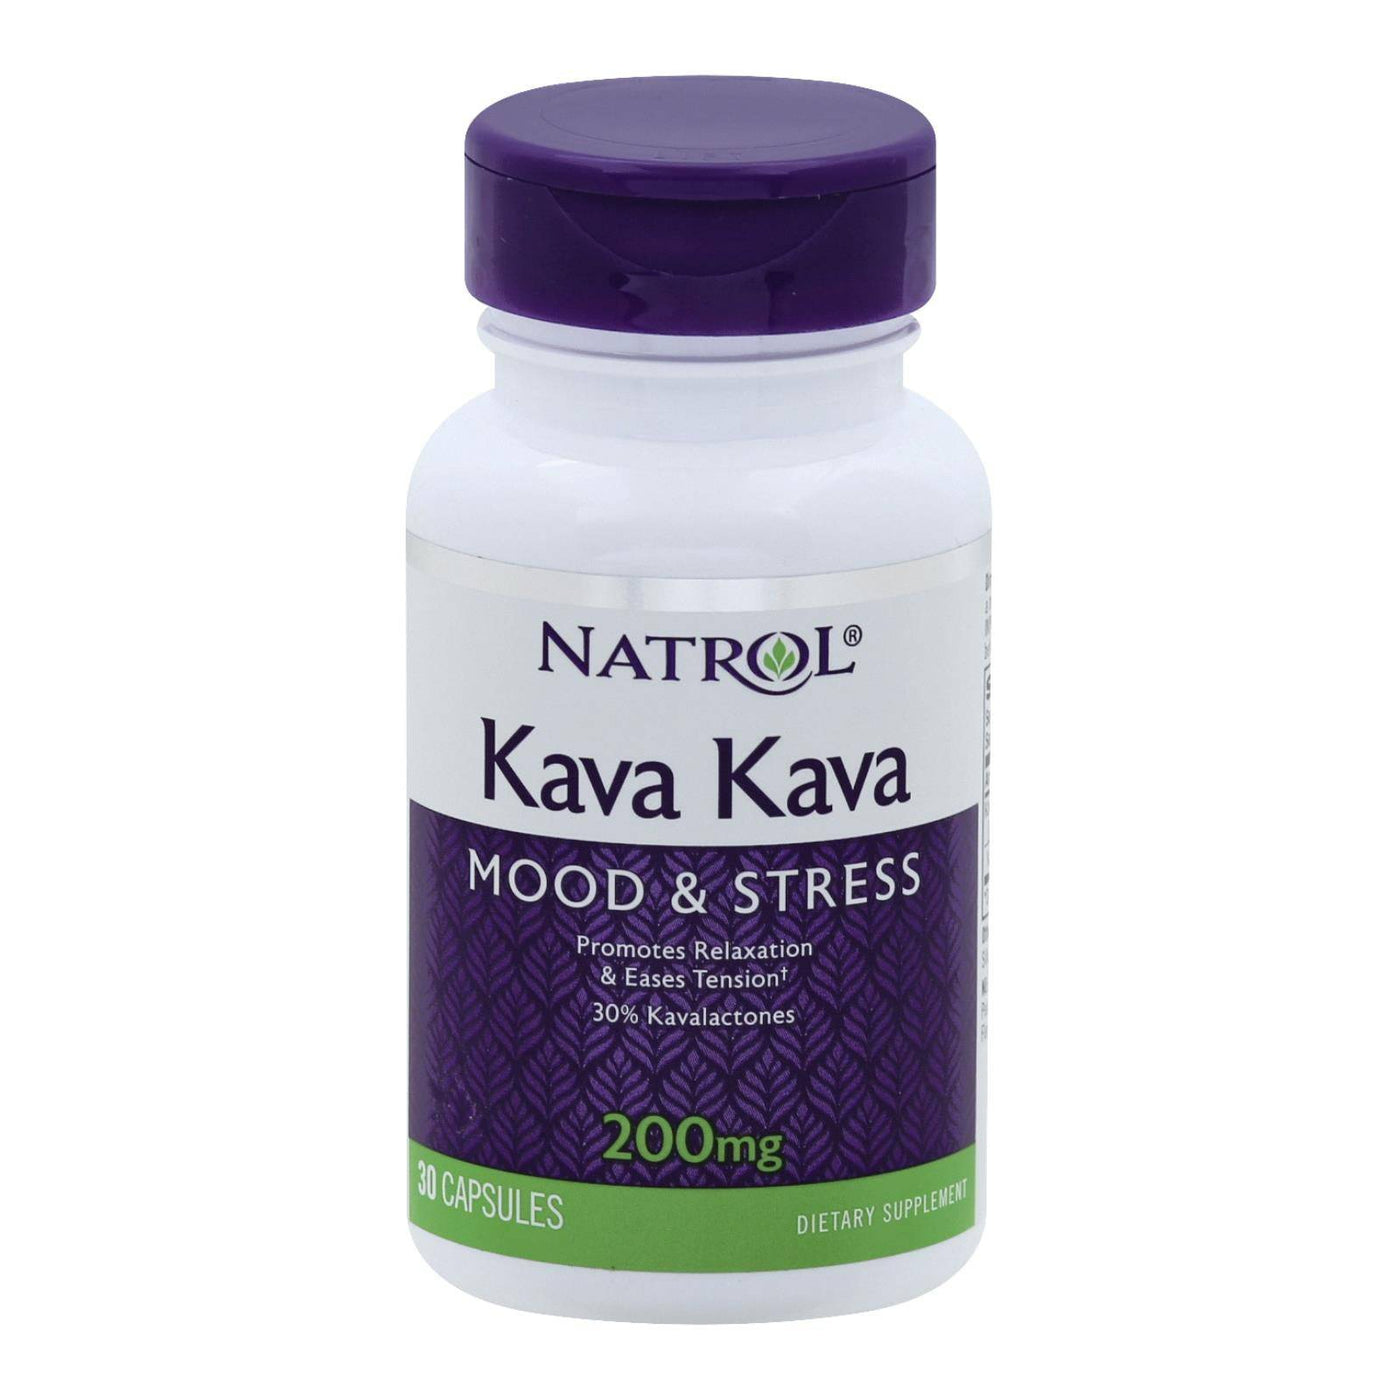 Buy Natrol Kava Kava 200 Mg - 30 Caps  at OnlyNaturals.us